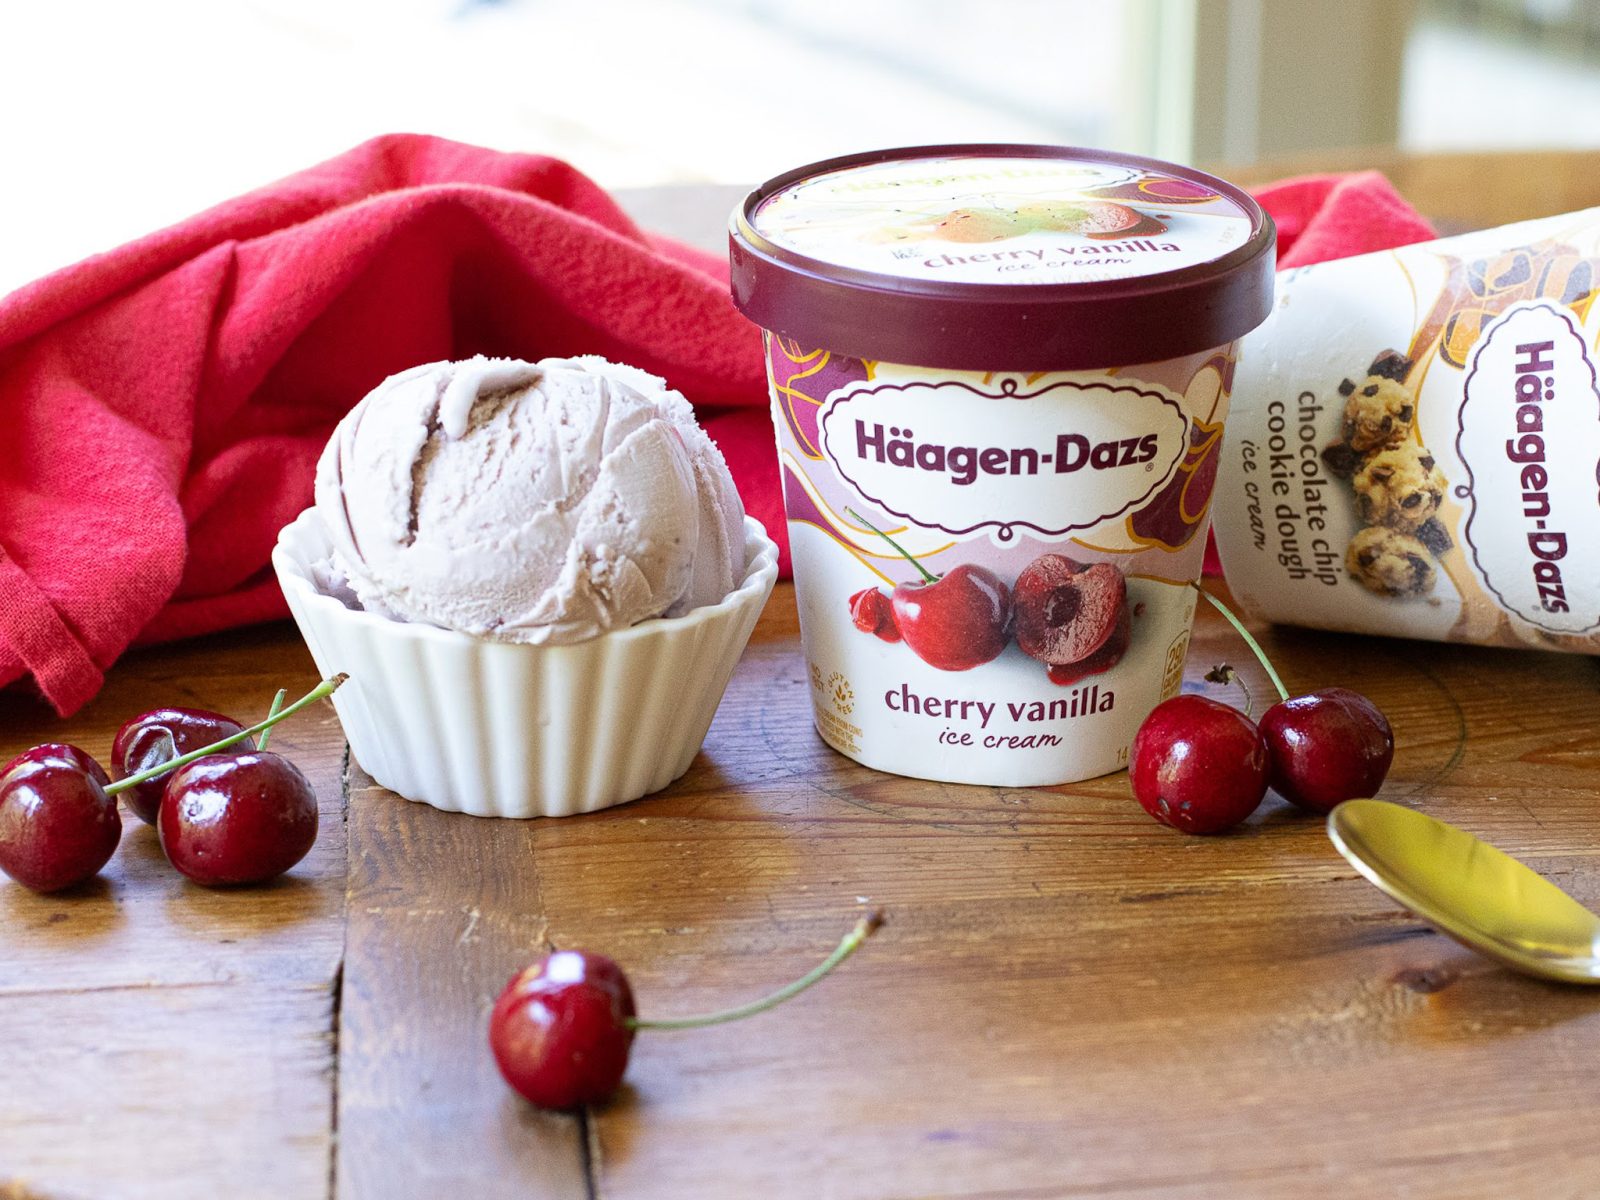 Get Haagen-Dazs Ice Cream For Just $2.99 At Kroger